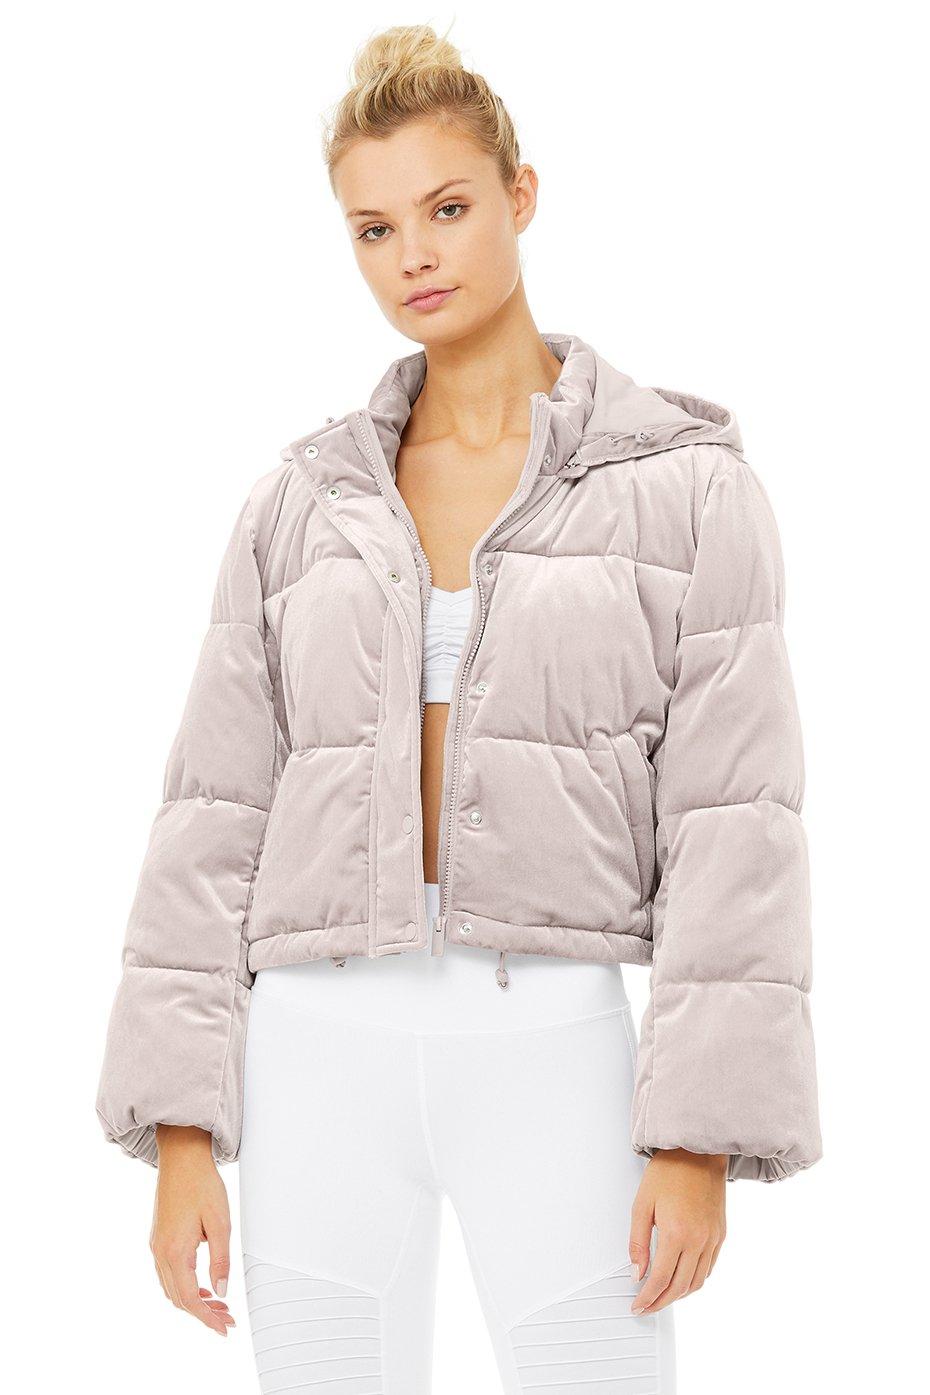 Alo Yoga | Velvet Puffer Jacket In Lavender Cloud, Size: Large - Lyst